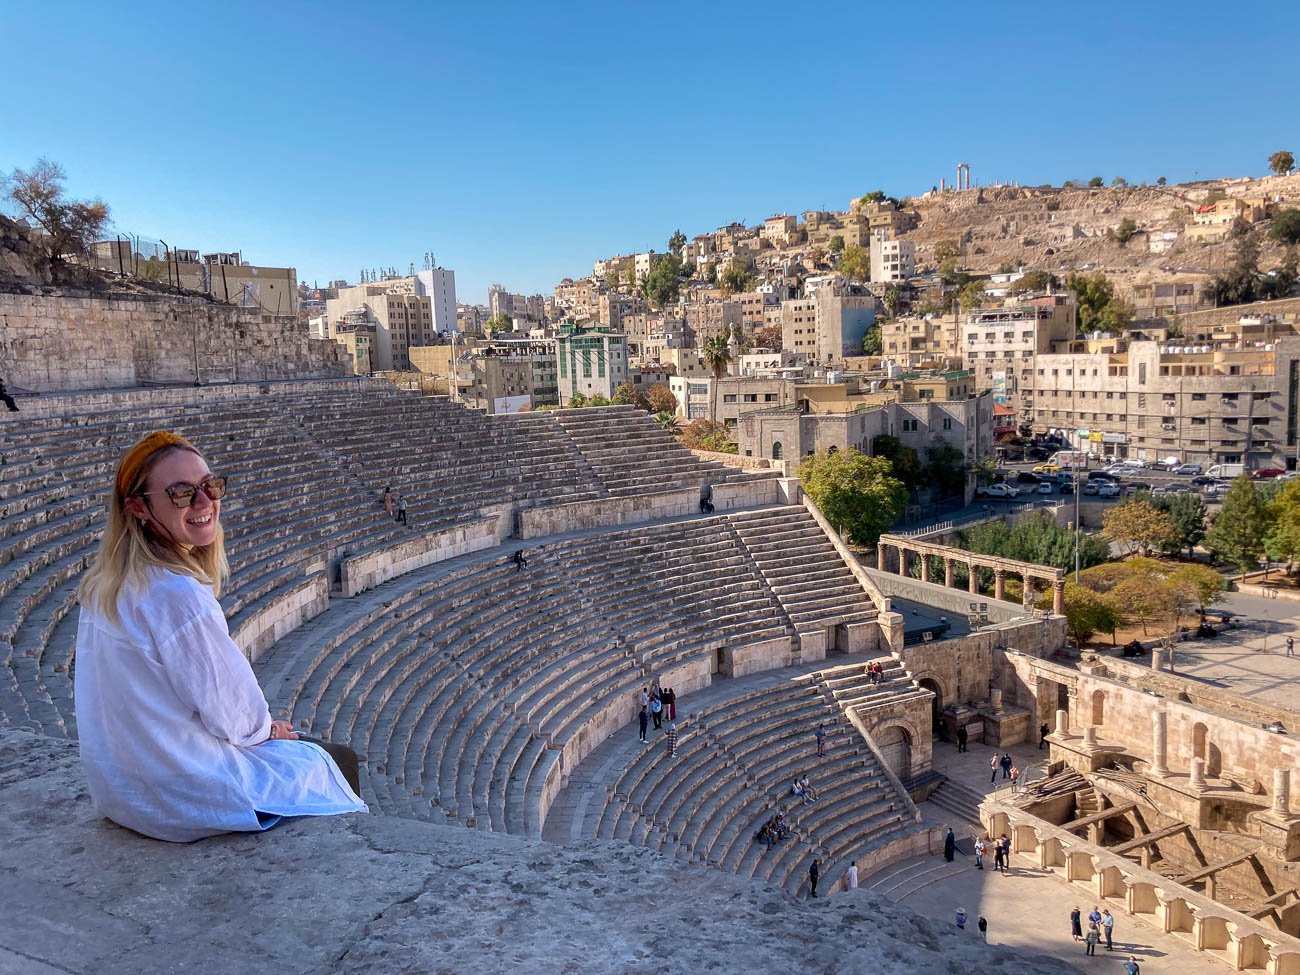 Roman Amphitheatre in Amman’s Old Town District